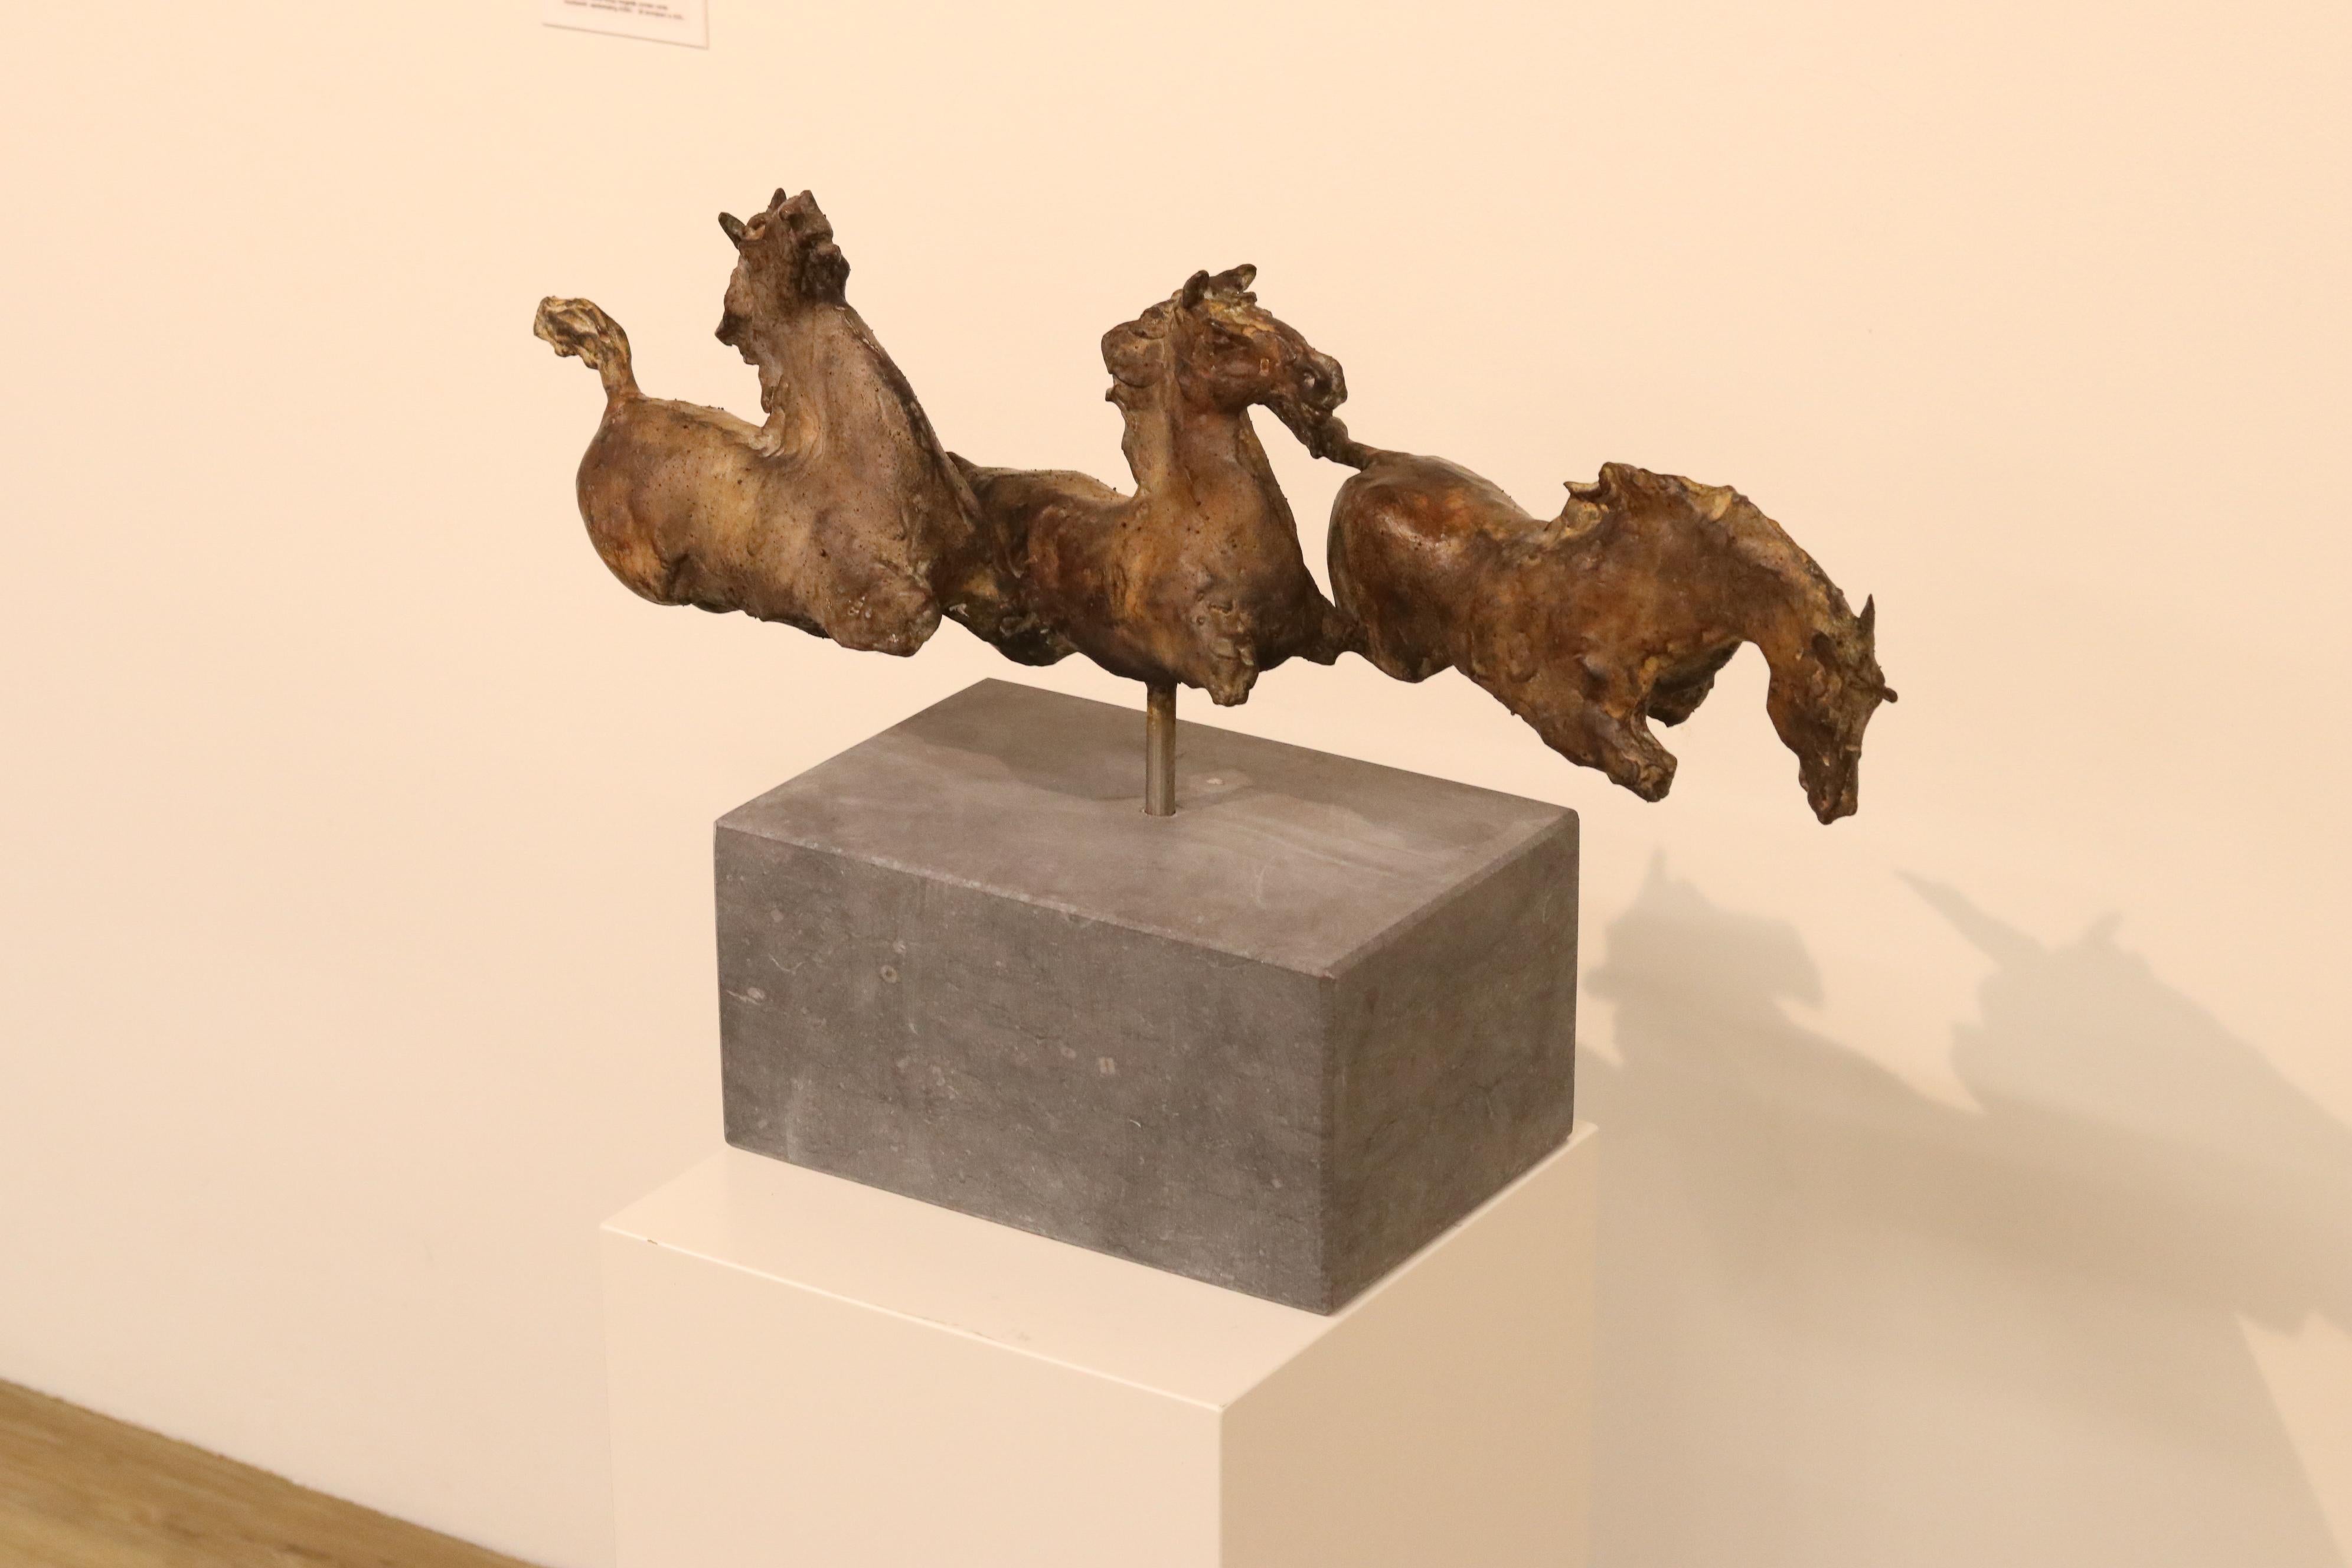 Wild Horses - 21st Century Contemporary Bronze Sculpture of Running Horses - Gold Figurative Sculpture by Wil van der Laan